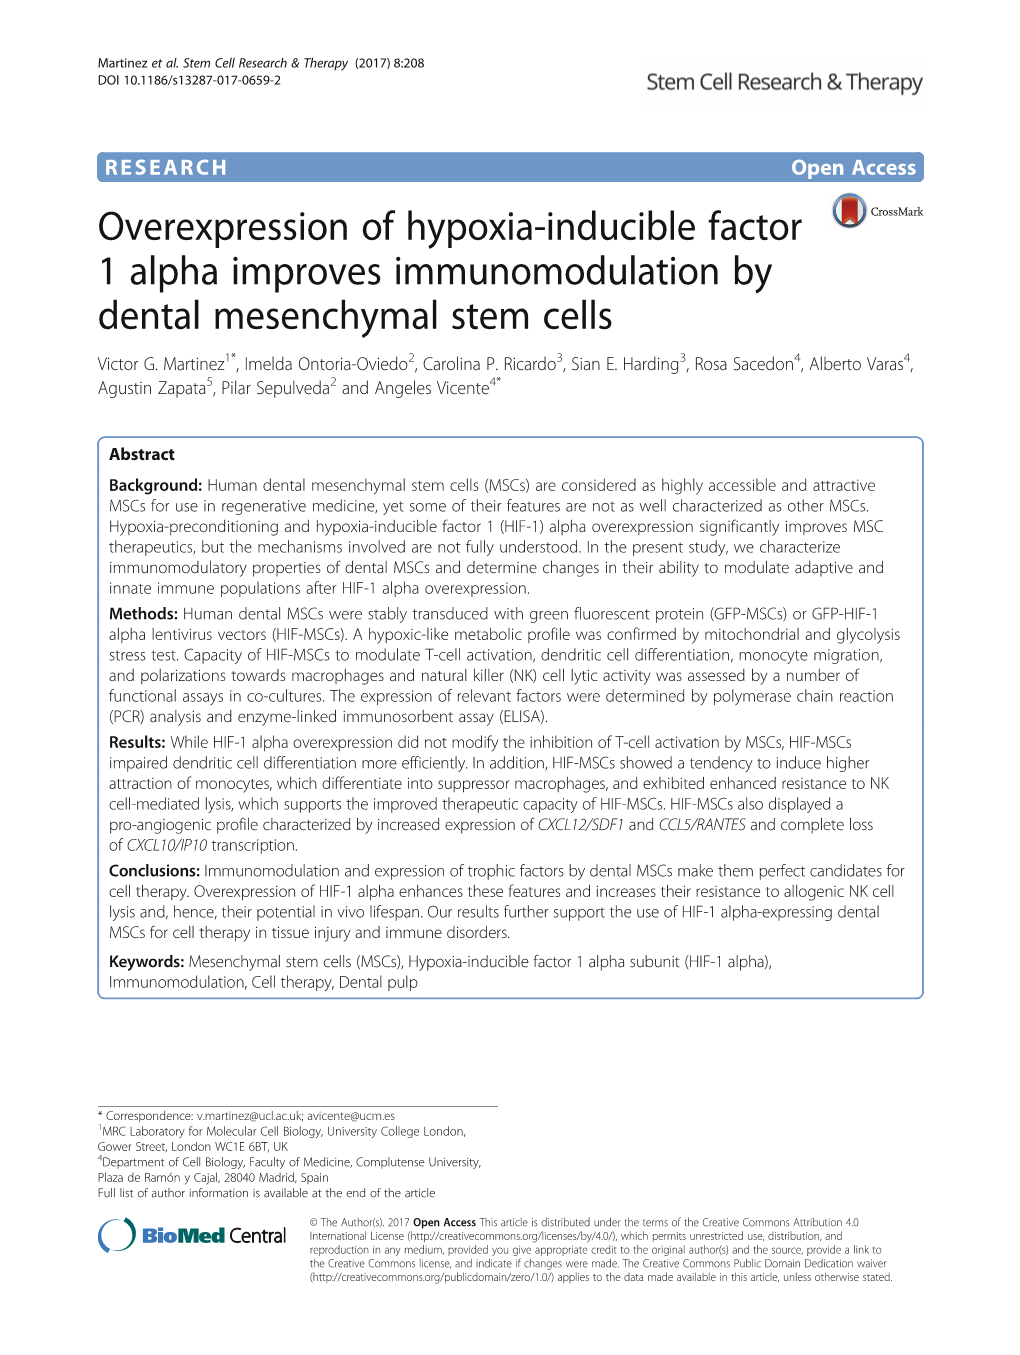 Overexpression of Hypoxia-Inducible Factor 1 Alpha Improves Immunomodulation by Dental Mesenchymal Stem Cells Victor G